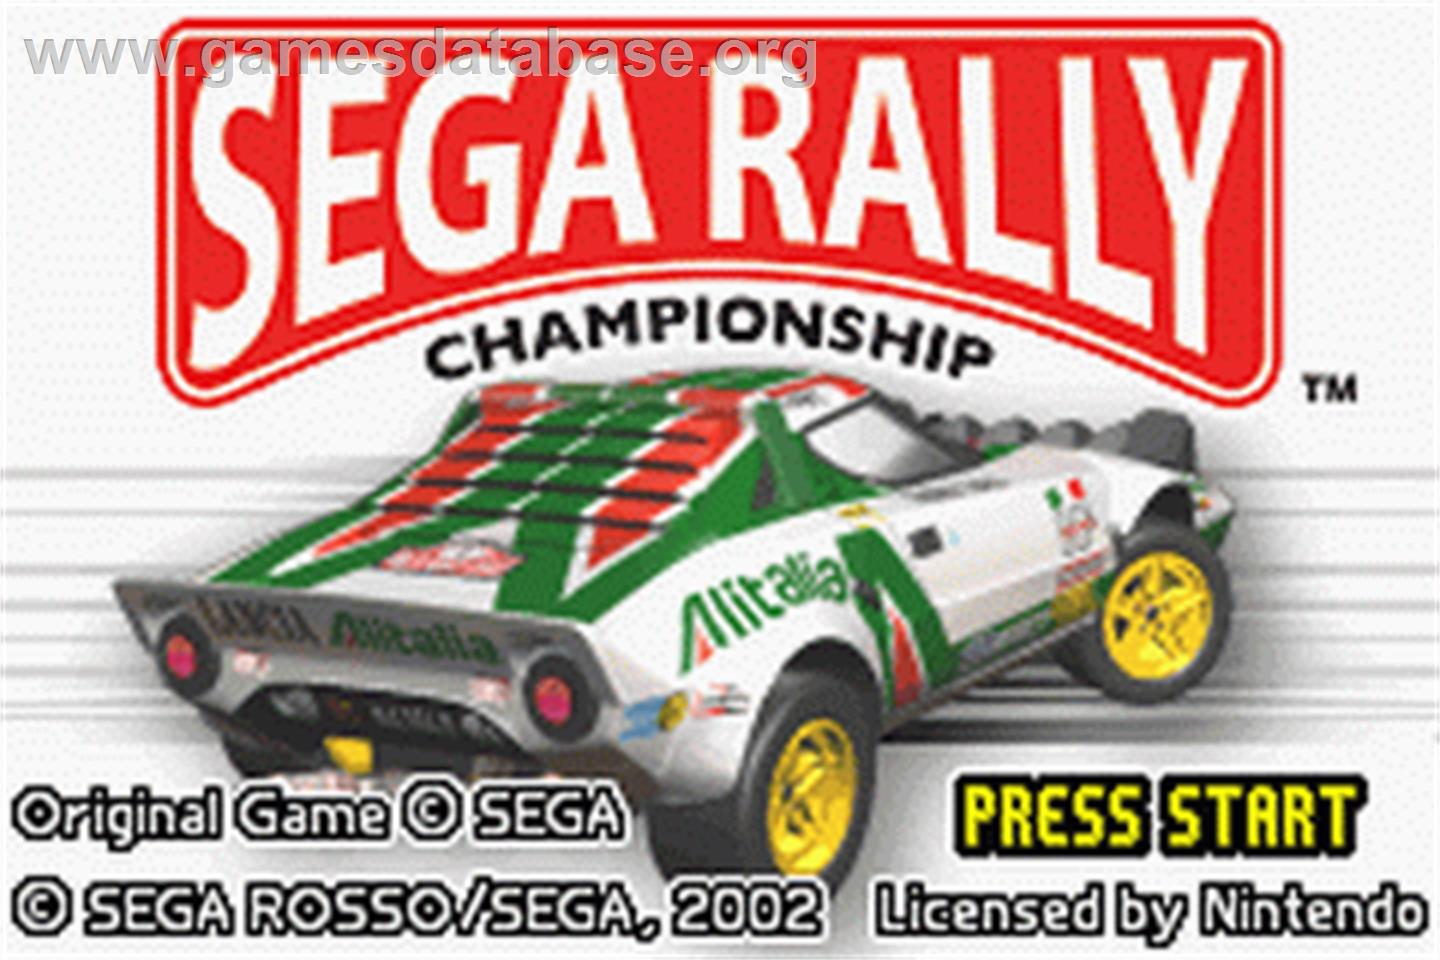 Sega Rally Championship - Nintendo Game Boy Advance - Artwork - Title Screen